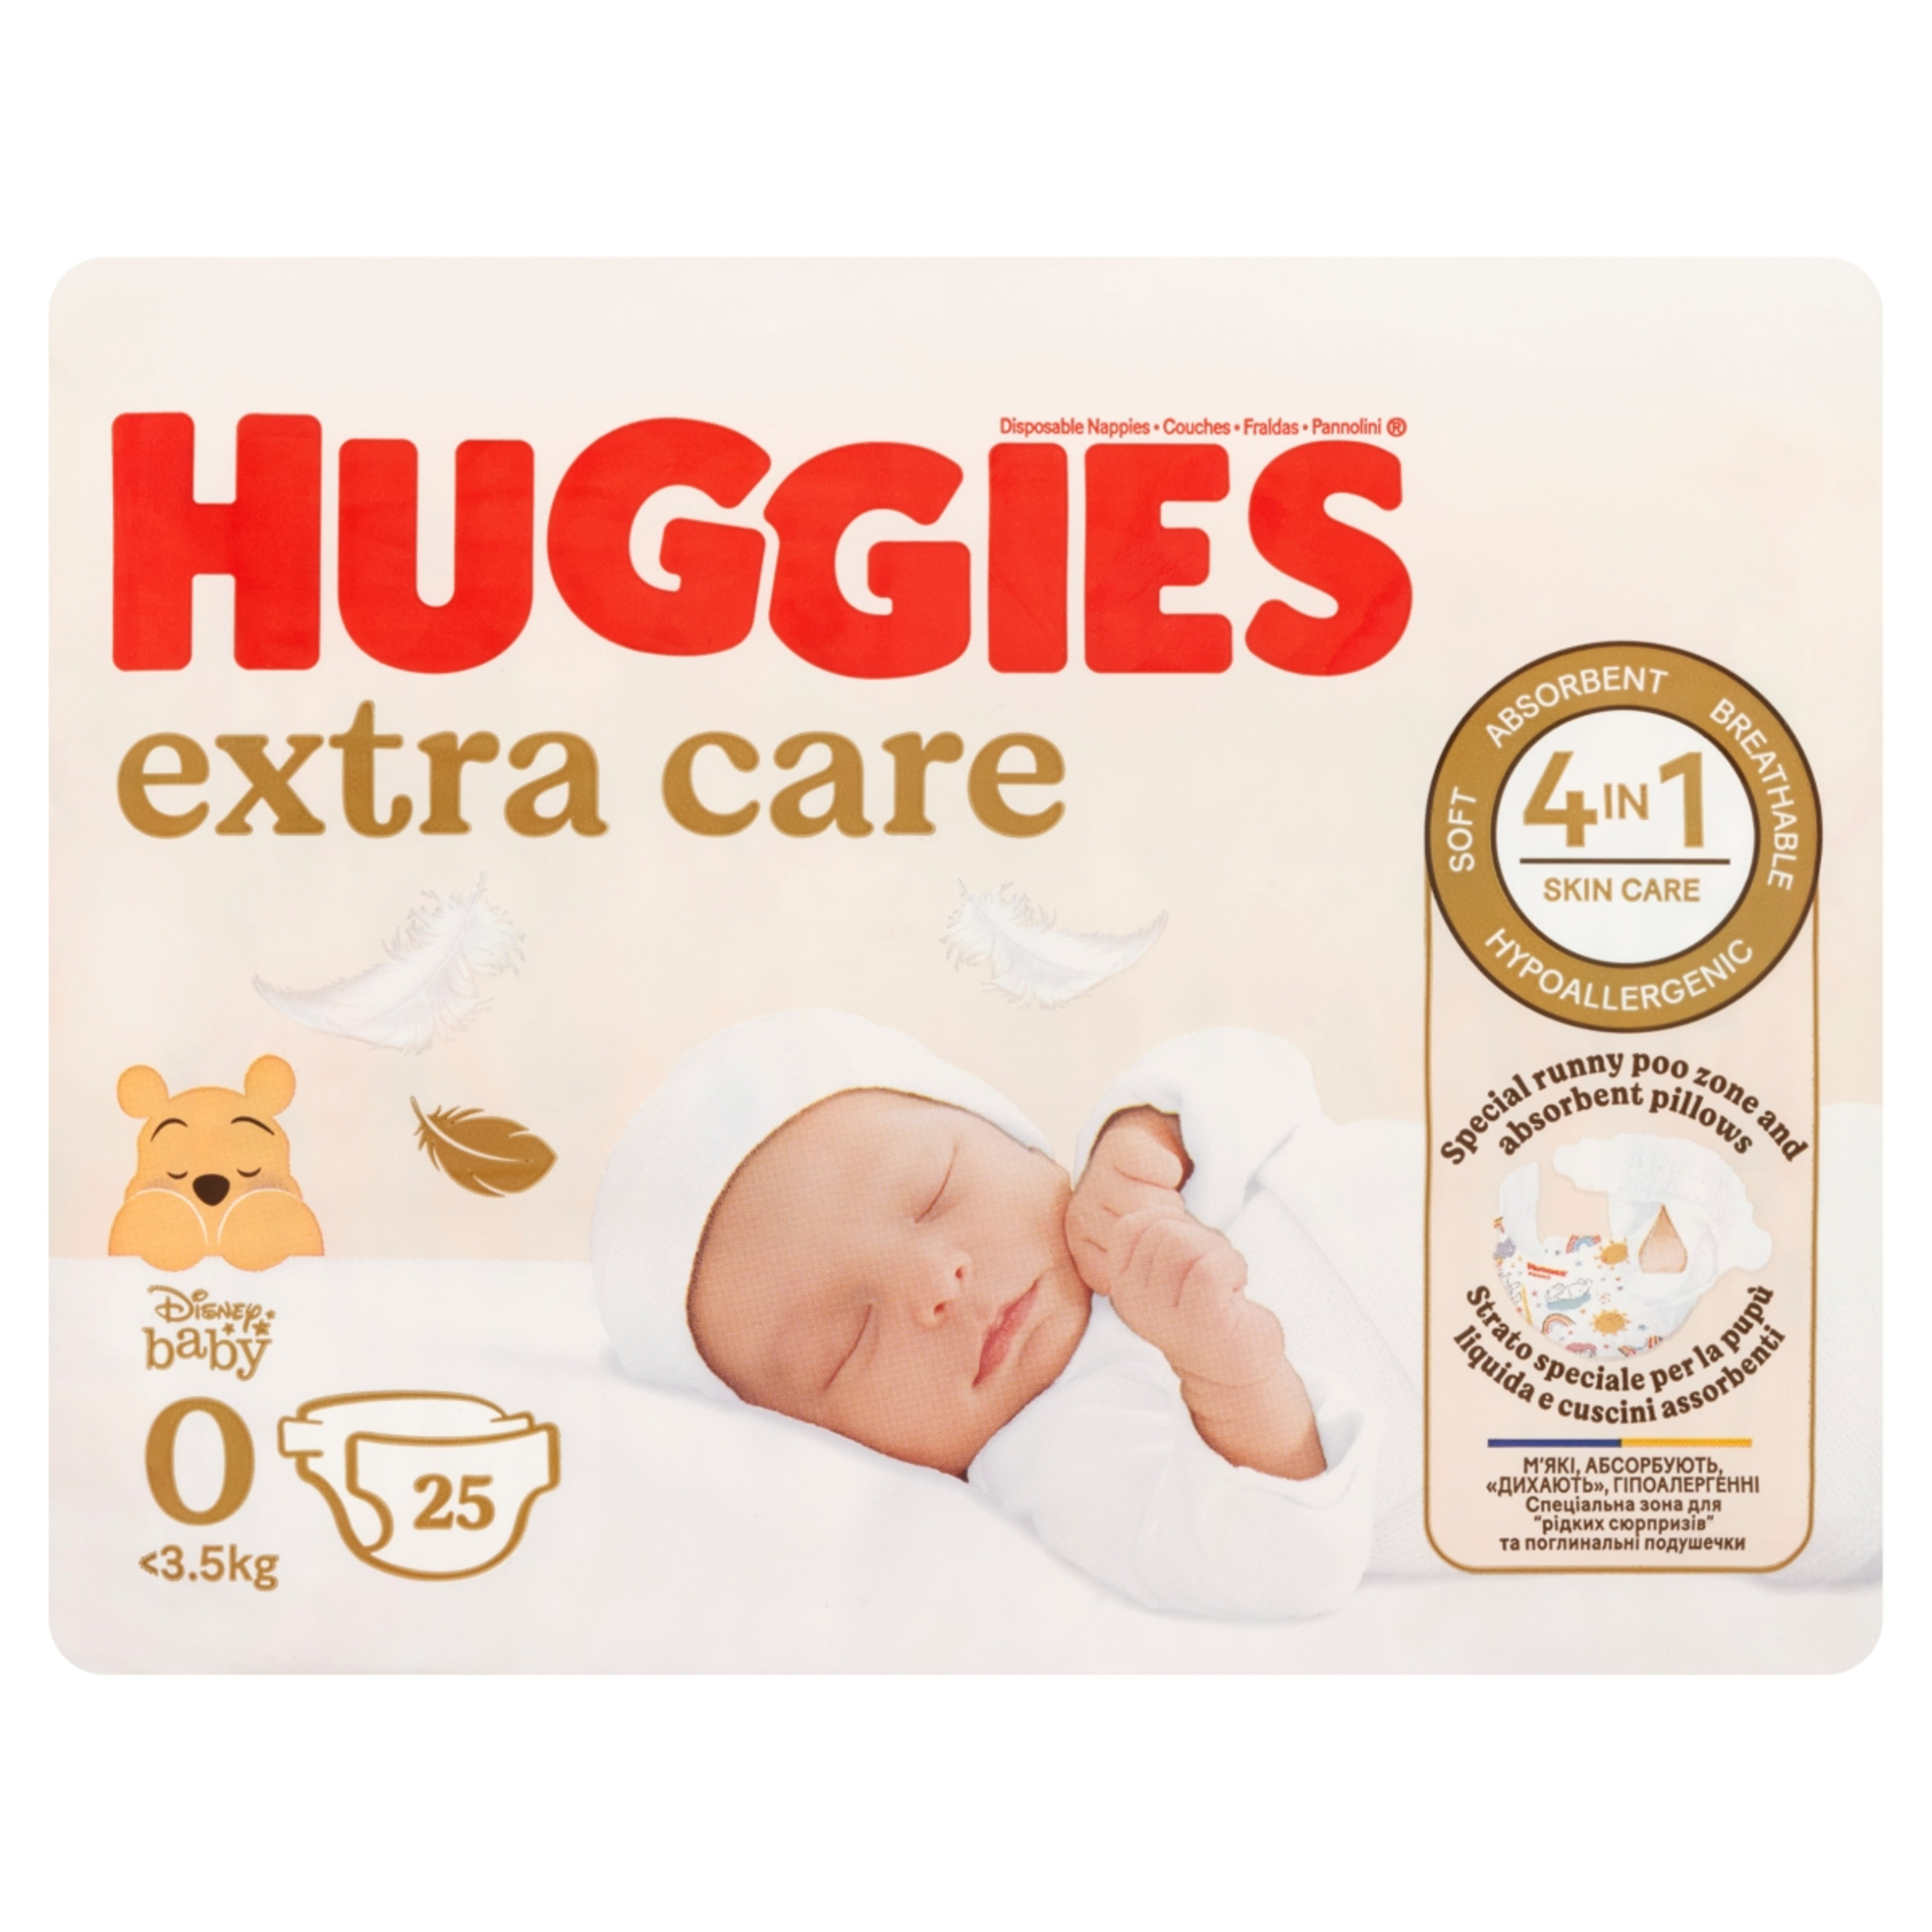 Huggies Extra Care nadrágpelenka 0- 4 kg - 25 db-1